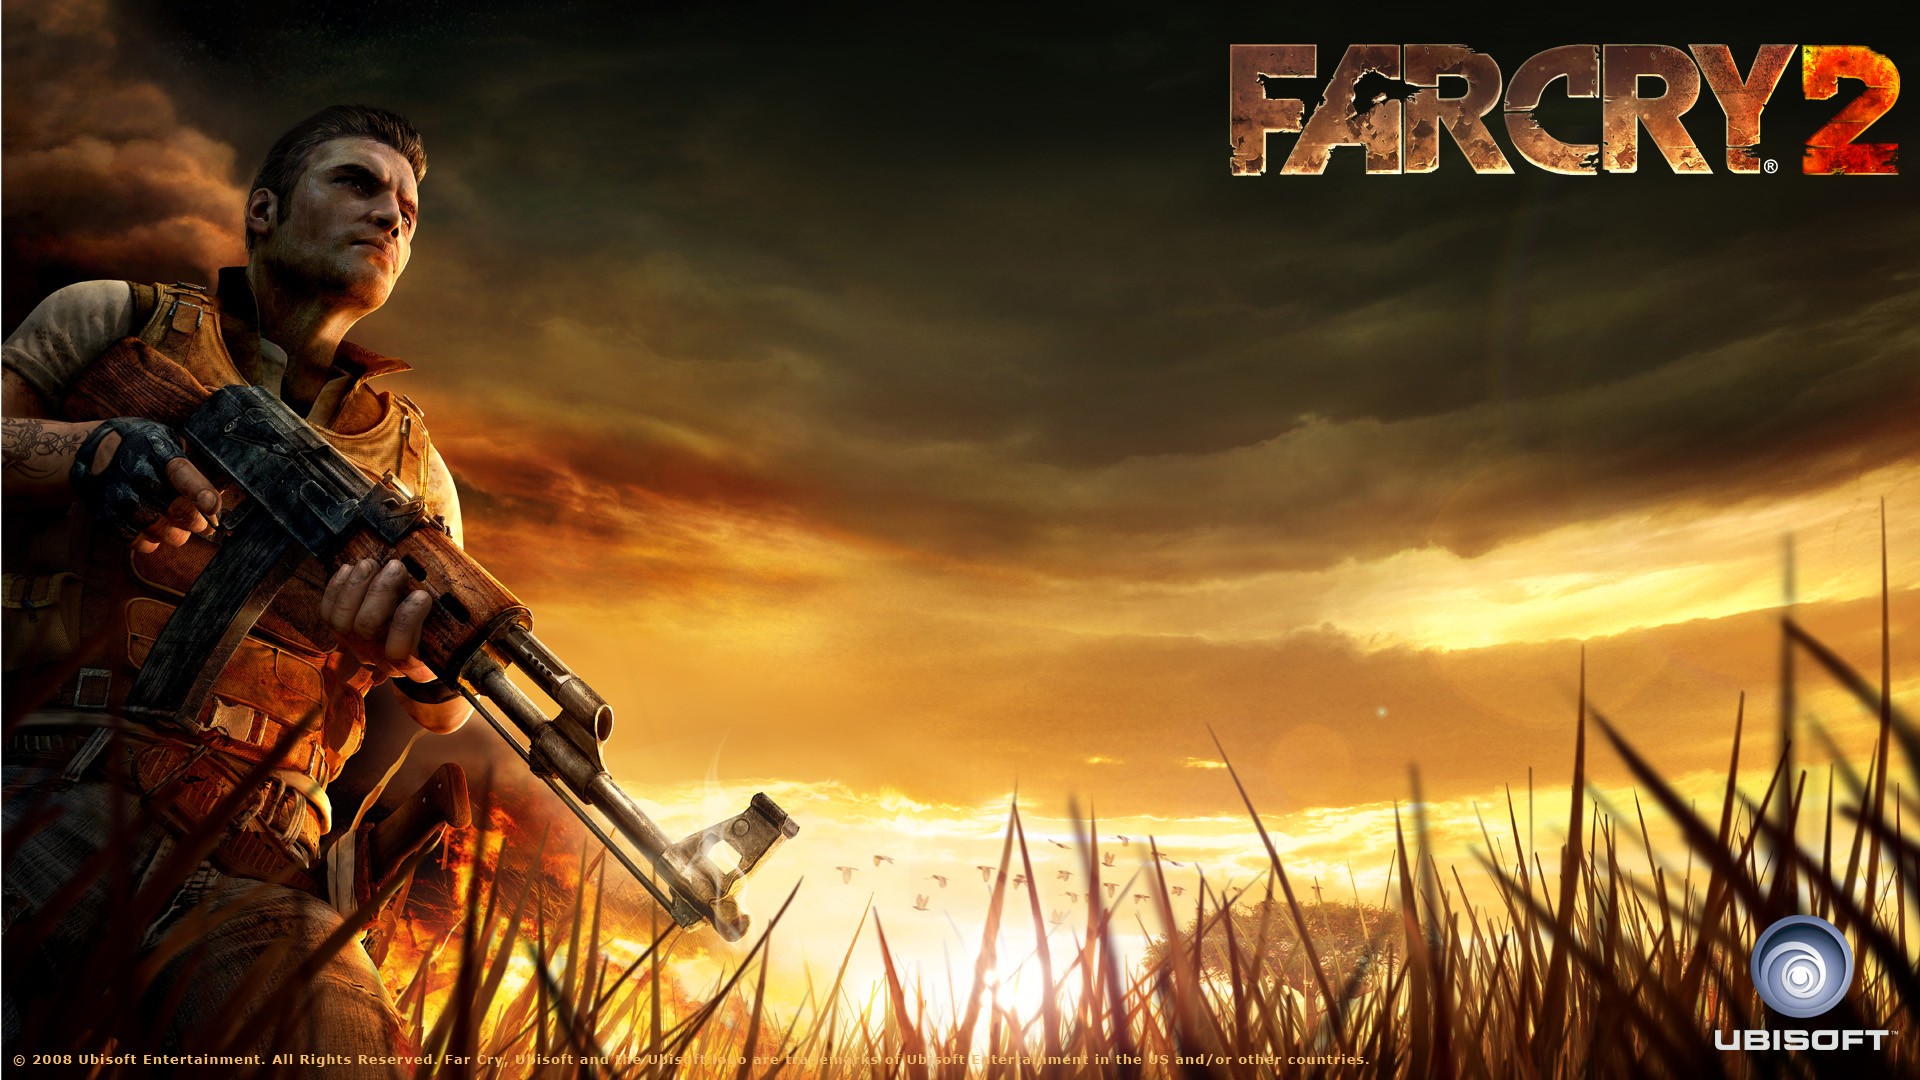 FARCRY 2 Full HD 1080p, LAN Multiplayer 2020 #3